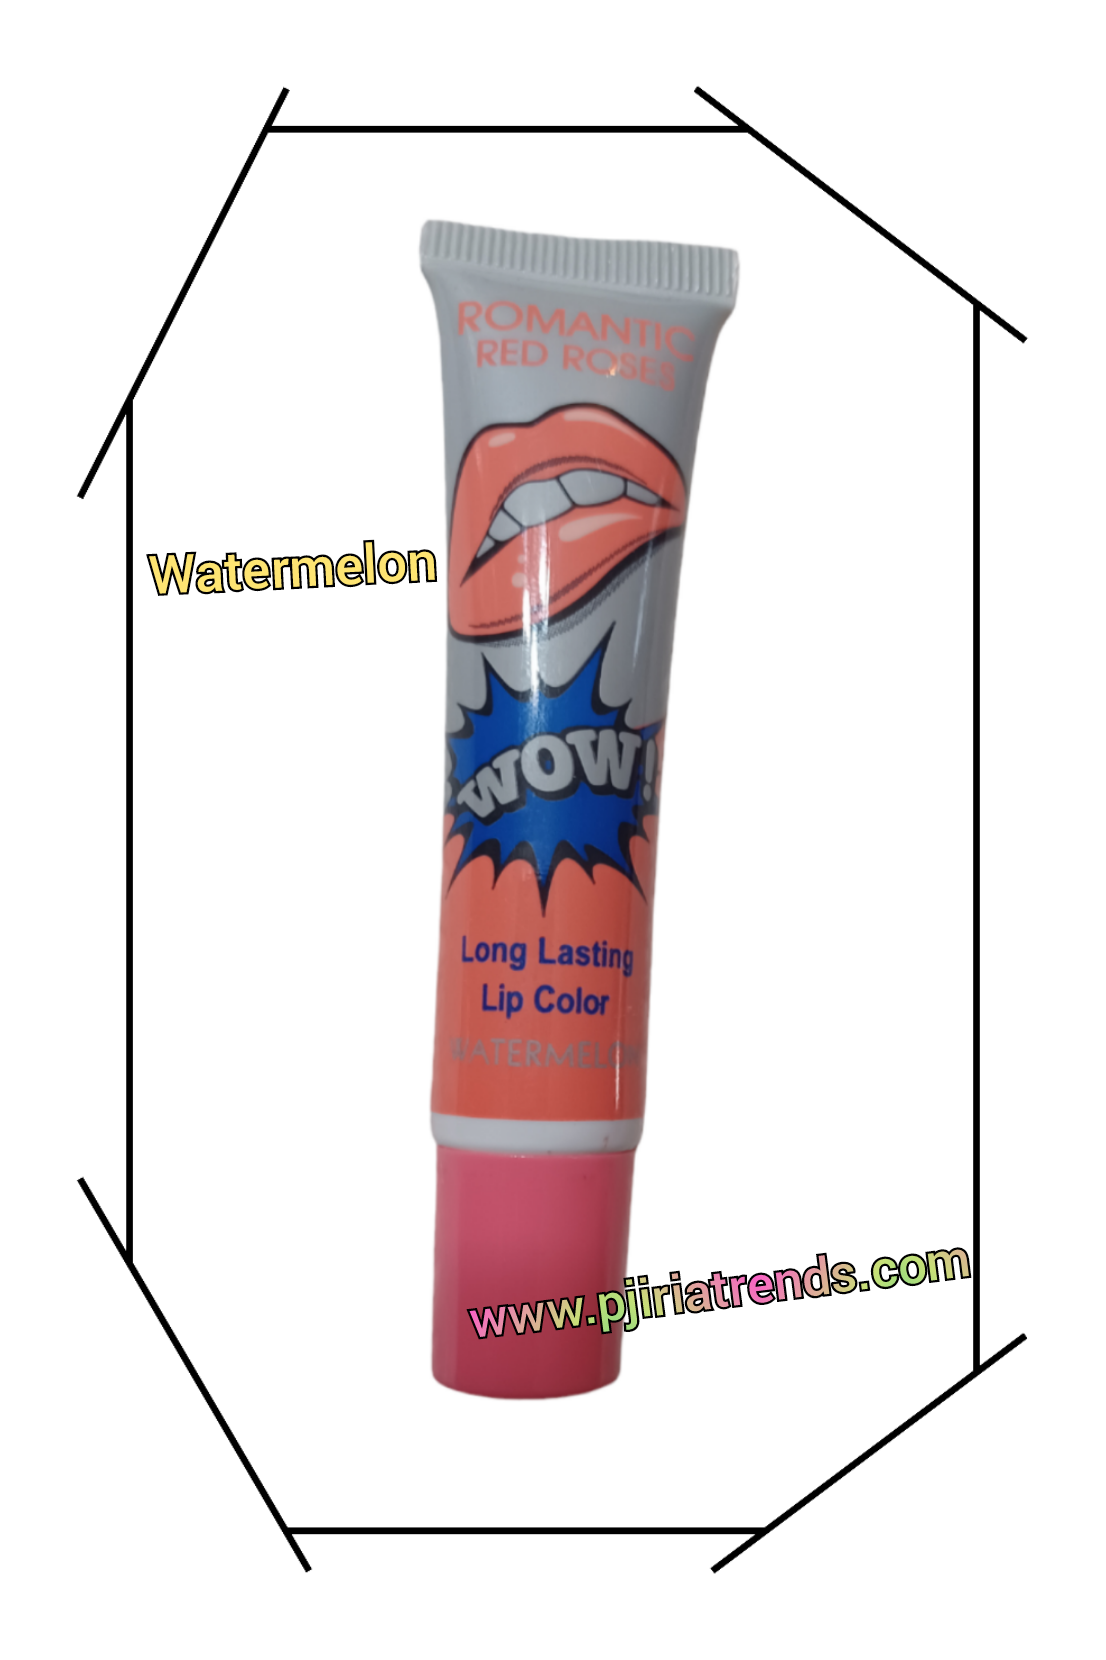 Romantic Peel Off Matte Lipstick